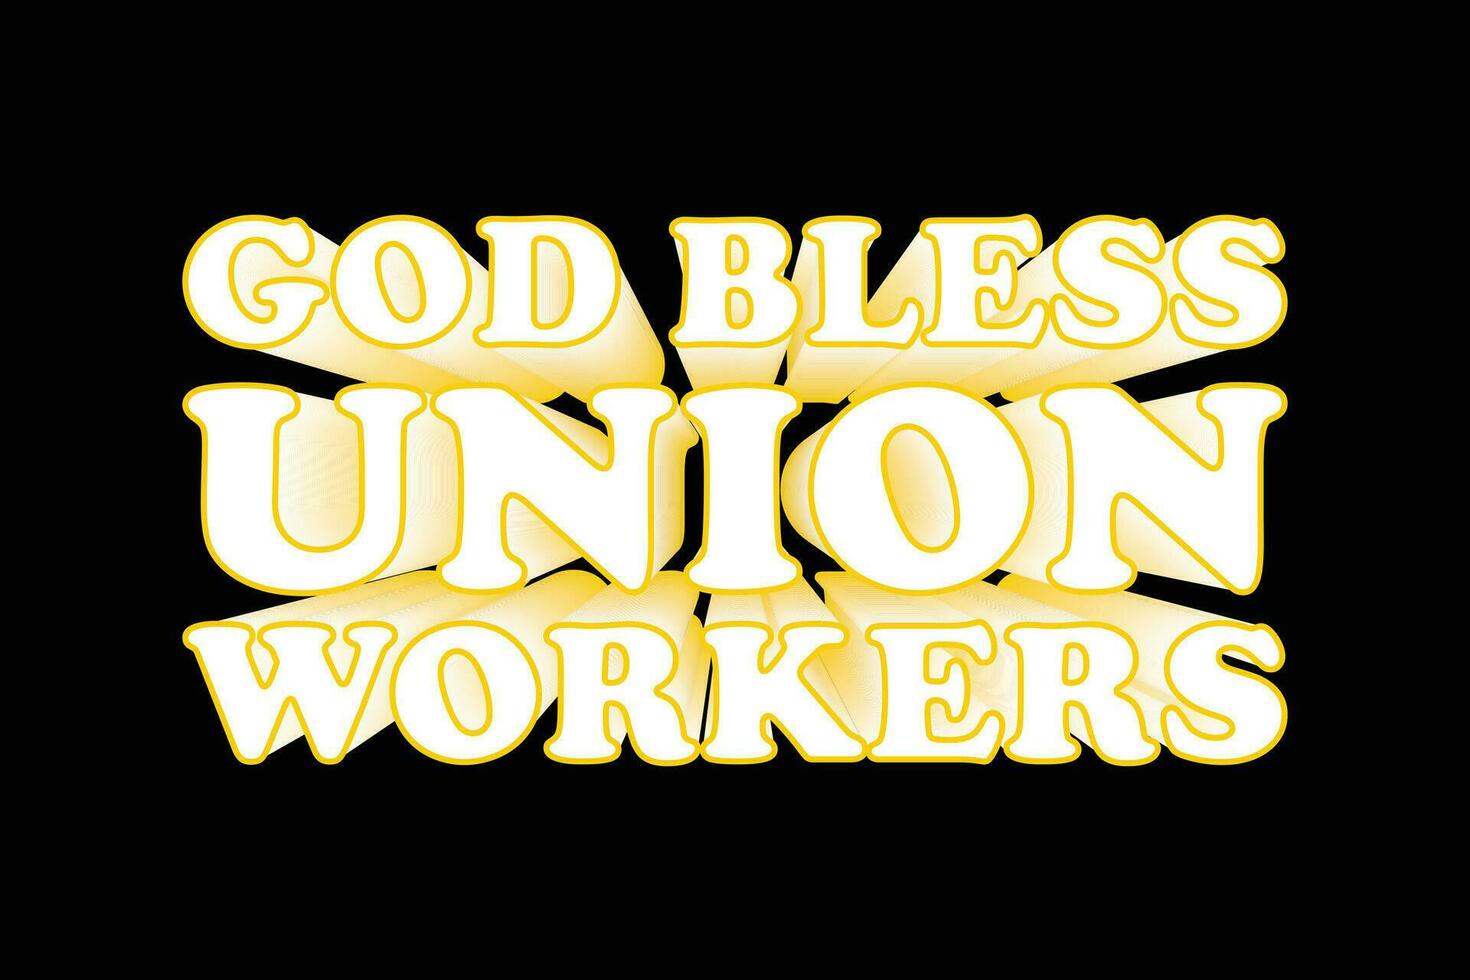 Gott segnen Union Arbeitskräfte Arbeit Tag t Hemd vektor